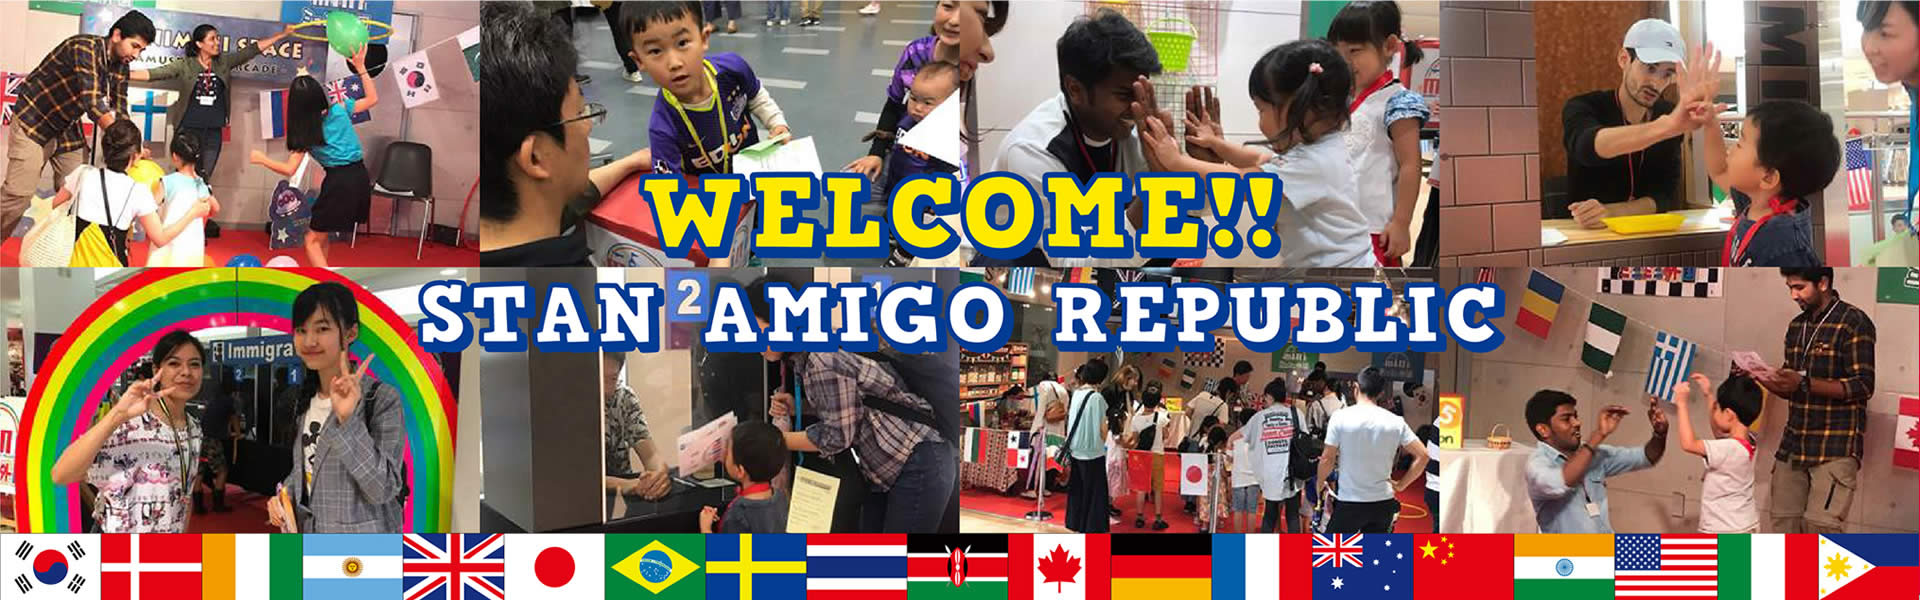 WELCOME!!STAN AMIGO REPUBLIC